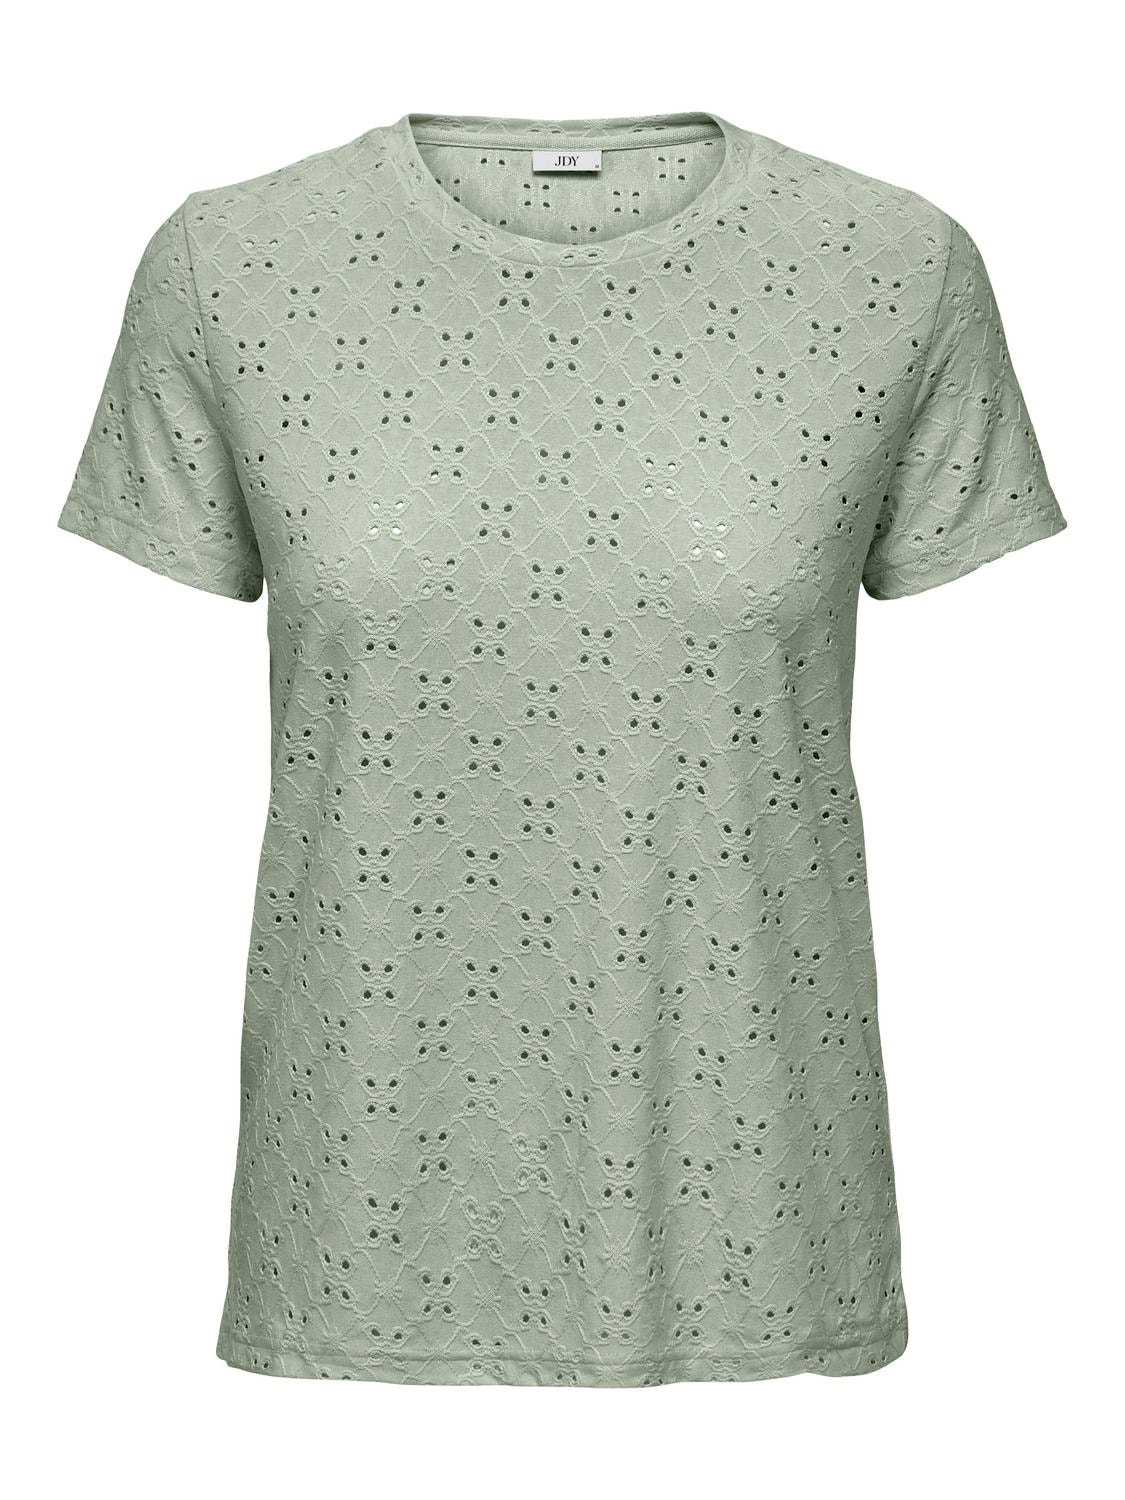 ONLY Normal geschnitten Rundhals T-Shirt -Desert Sage - 15158450